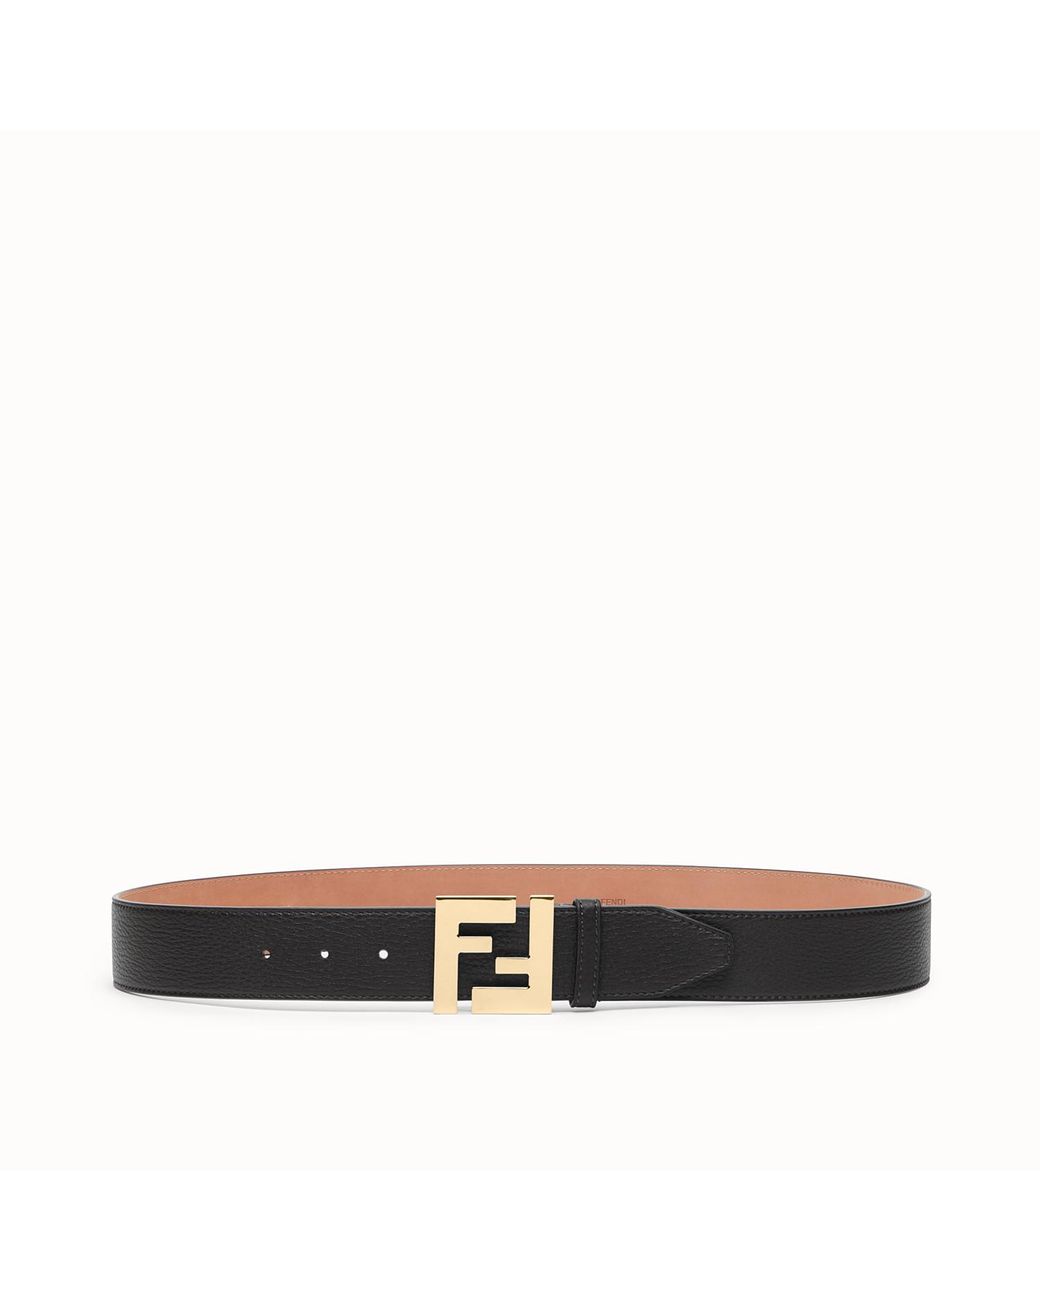 Fendi Leather Belt in Brown for Men - Lyst